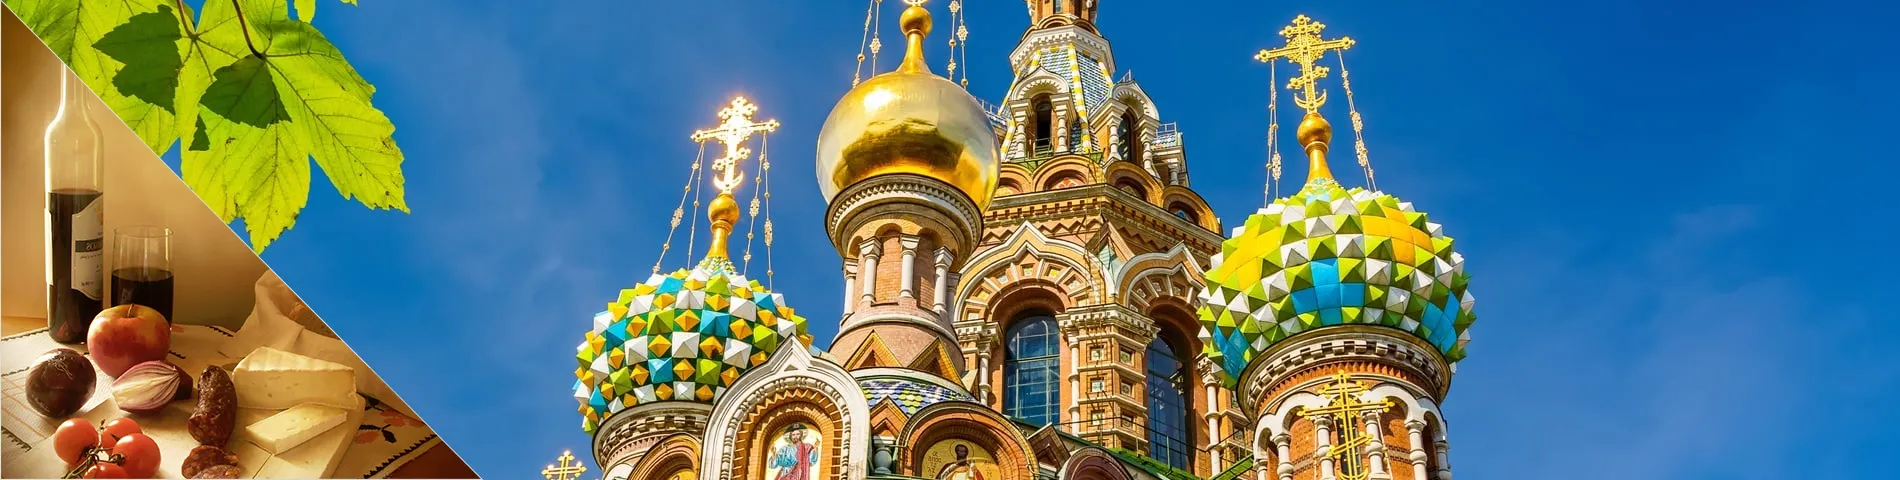 St. Petersburg - Russian & Culture